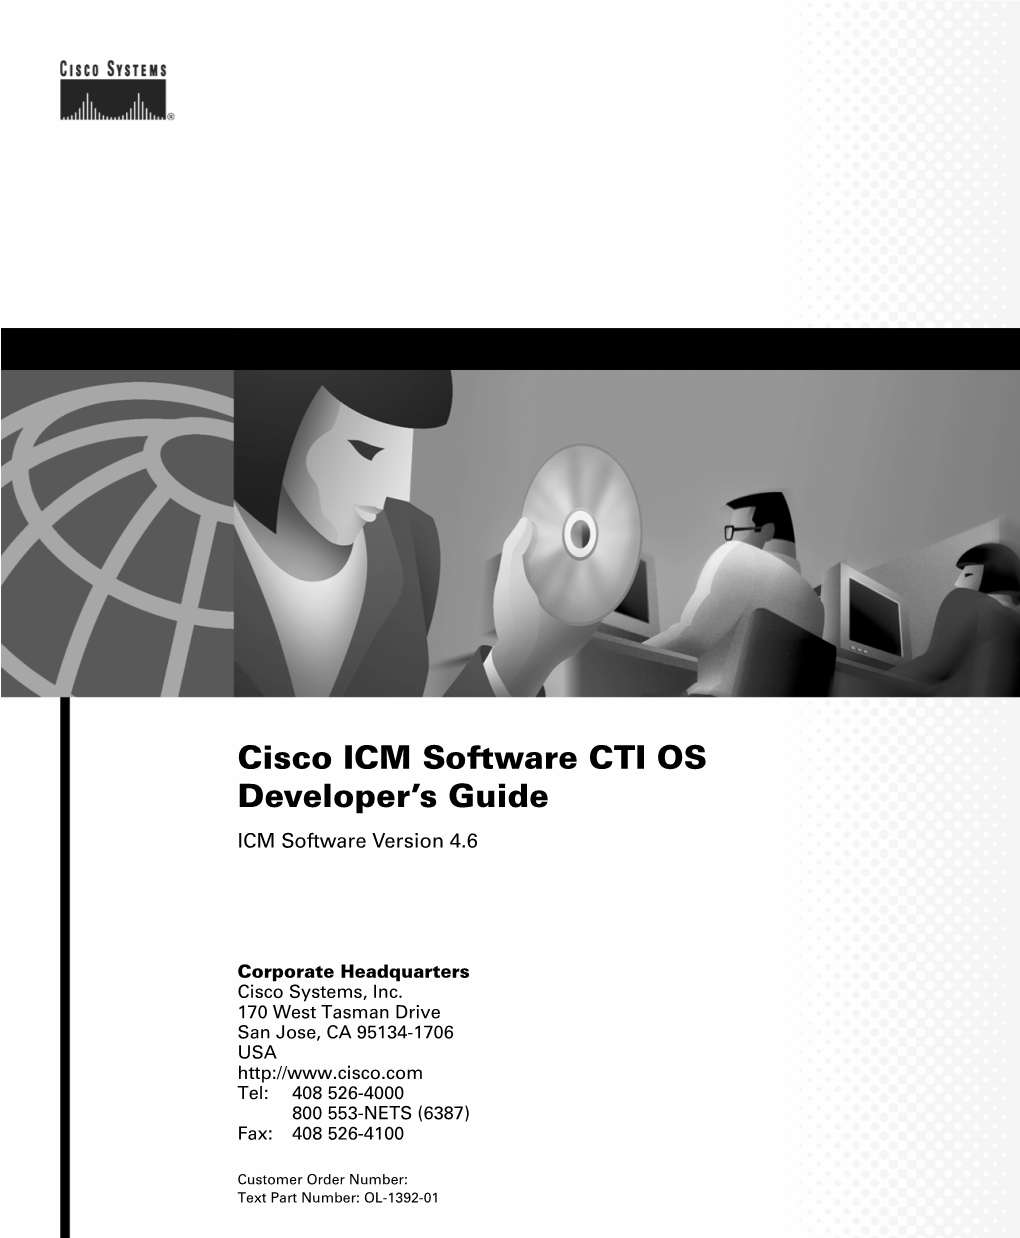 Cisco ICM Software Release 4.6 CTI OS Developer's Guide